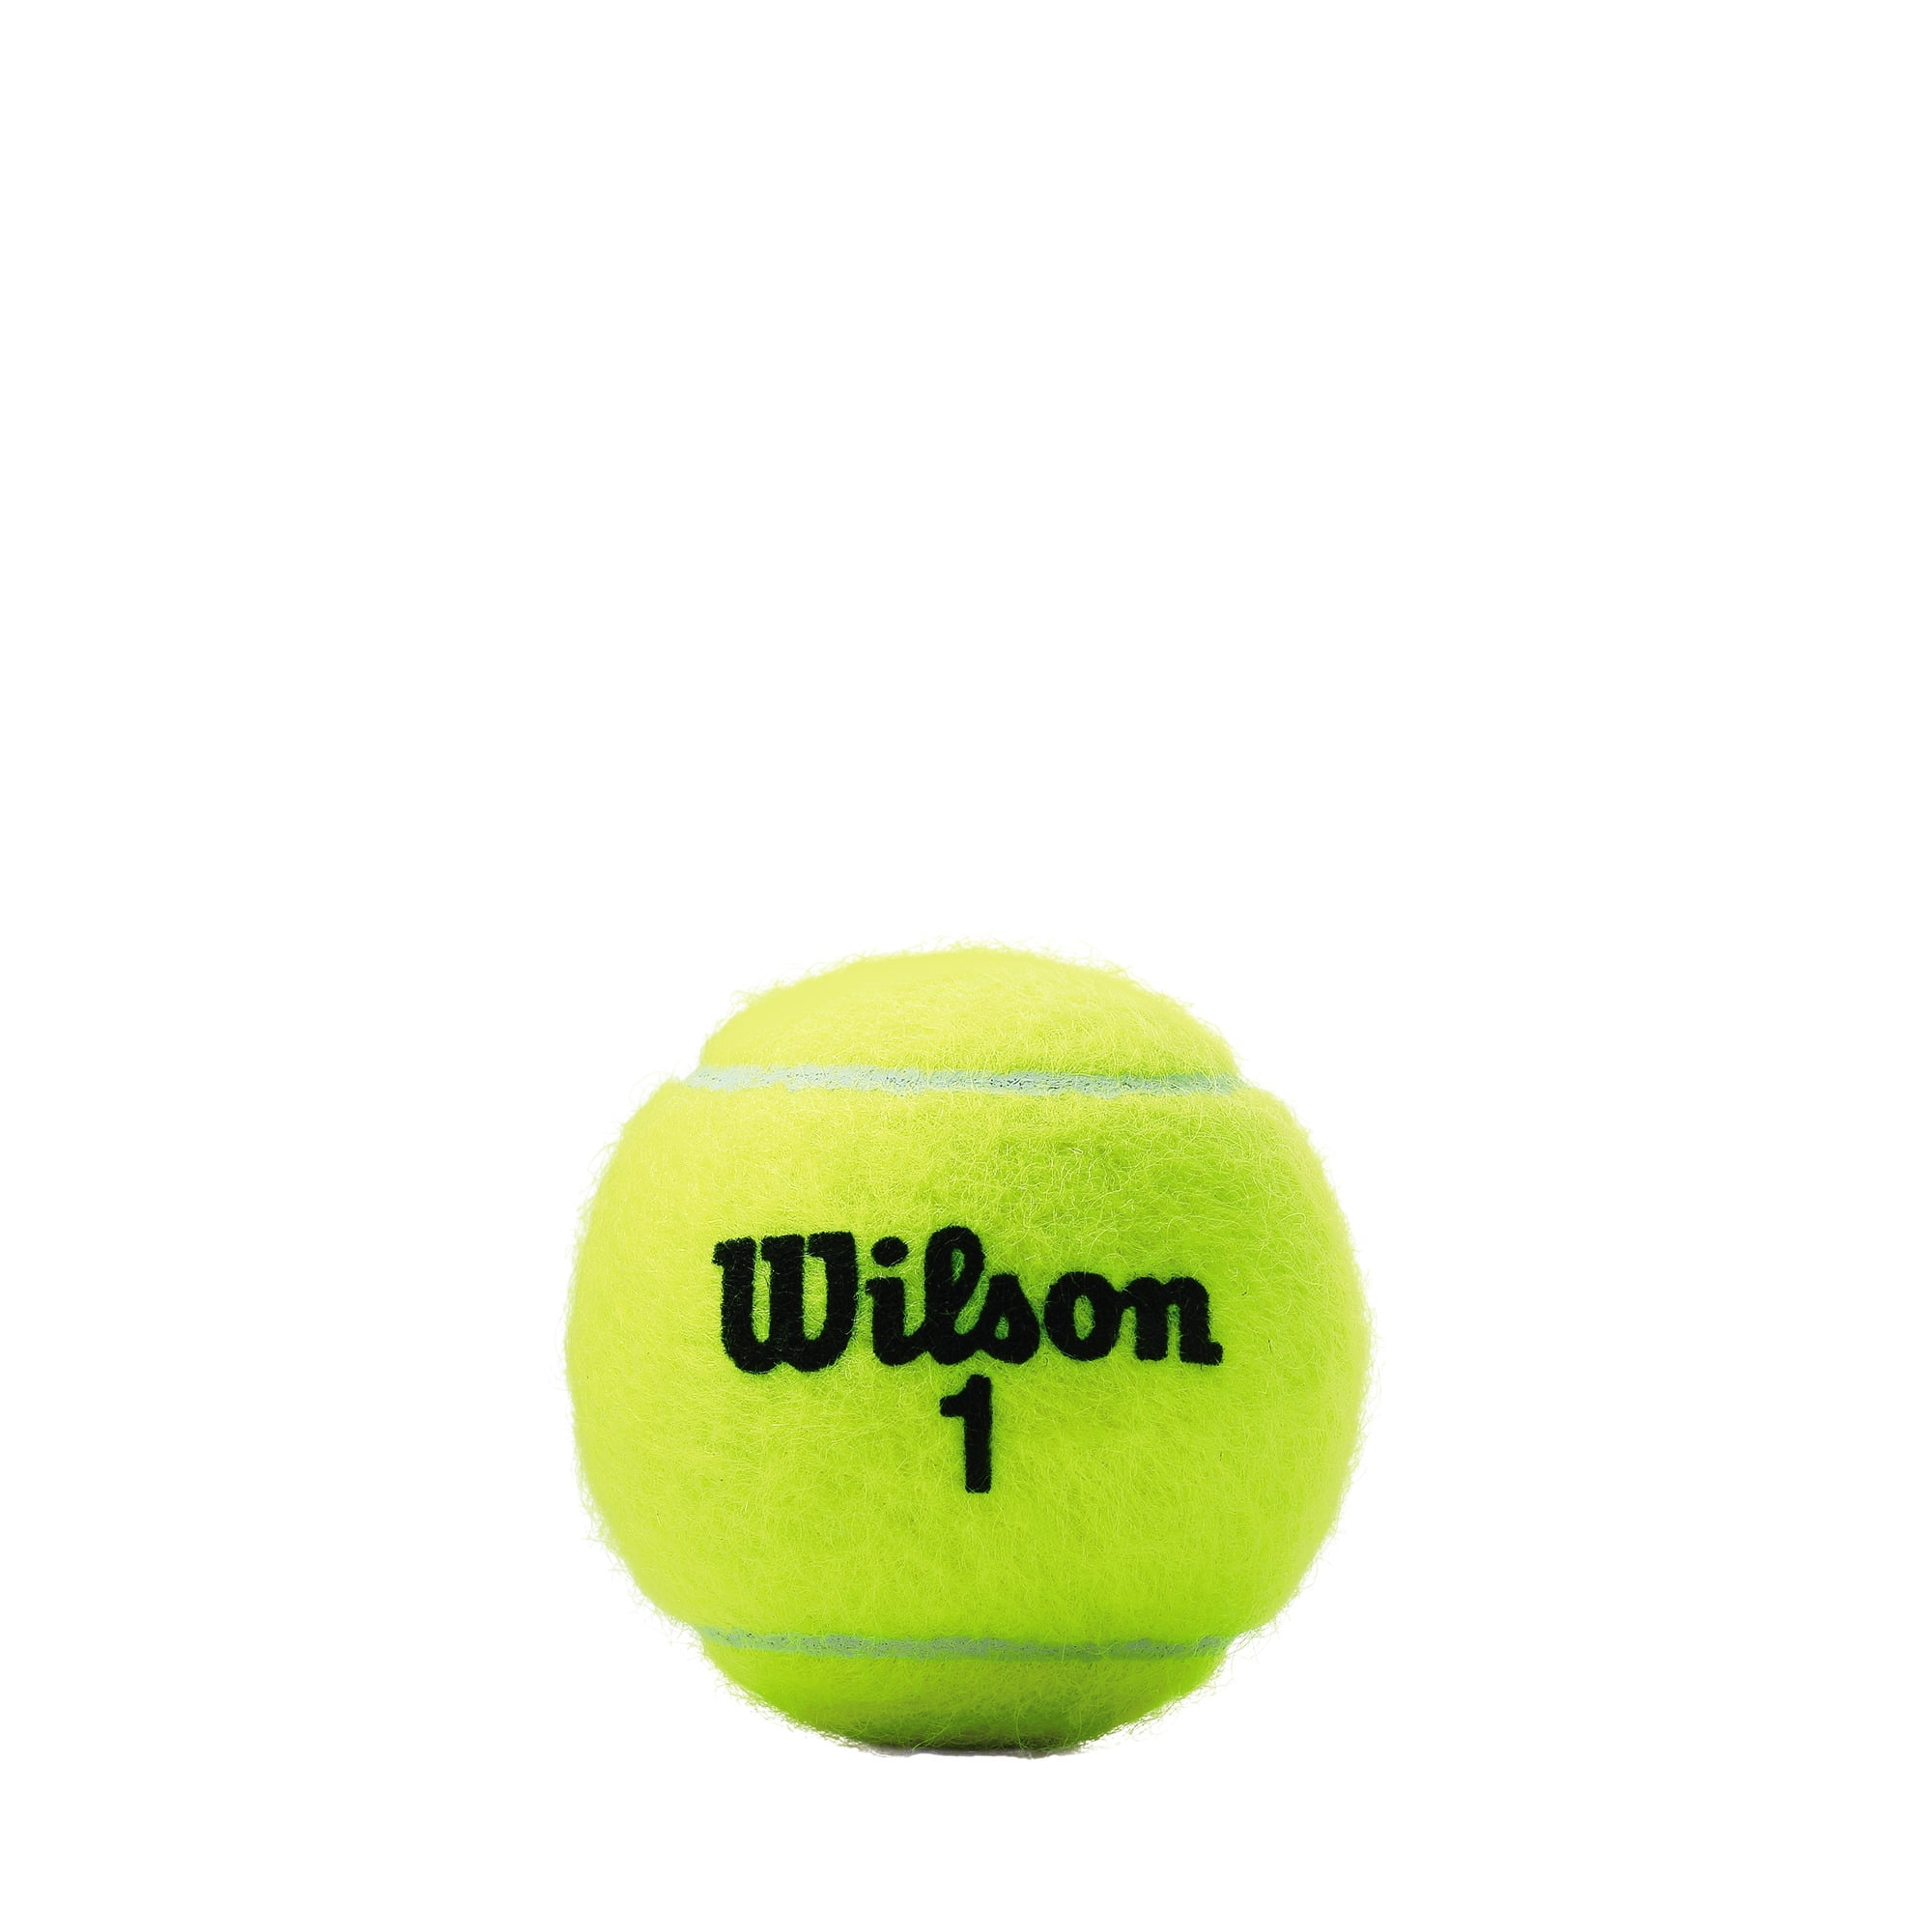 Представьте ядро размером с теннисный мячик. Вилсон тенисны теннисный мяч. Теннисные мячи Wilson Championship 72 мяча. Теннисный мяч Wilson us open 4. Мячи теннисные Wilson Roland GARROS.